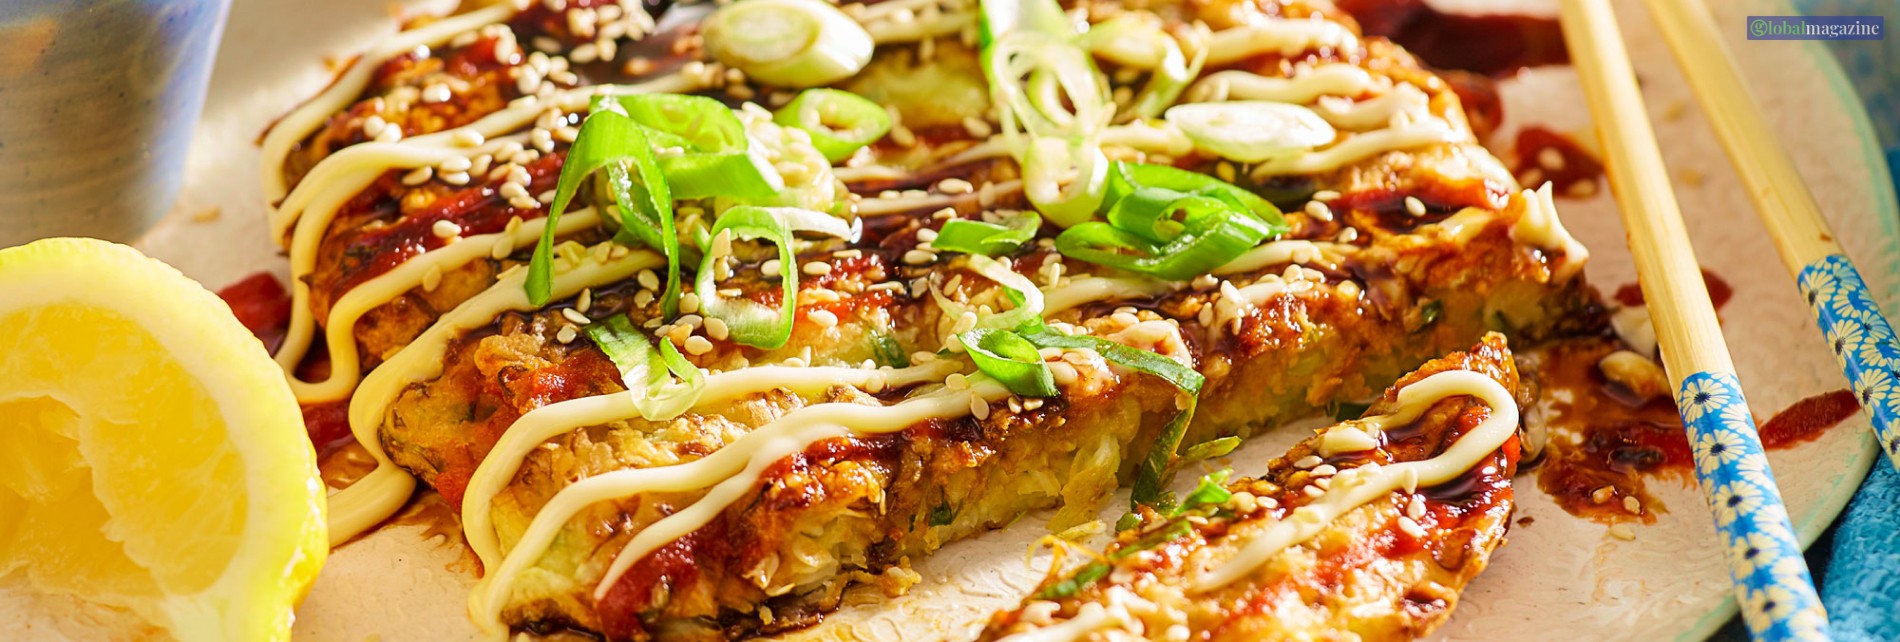 6 best okonomiyaki in tokyo that you should try